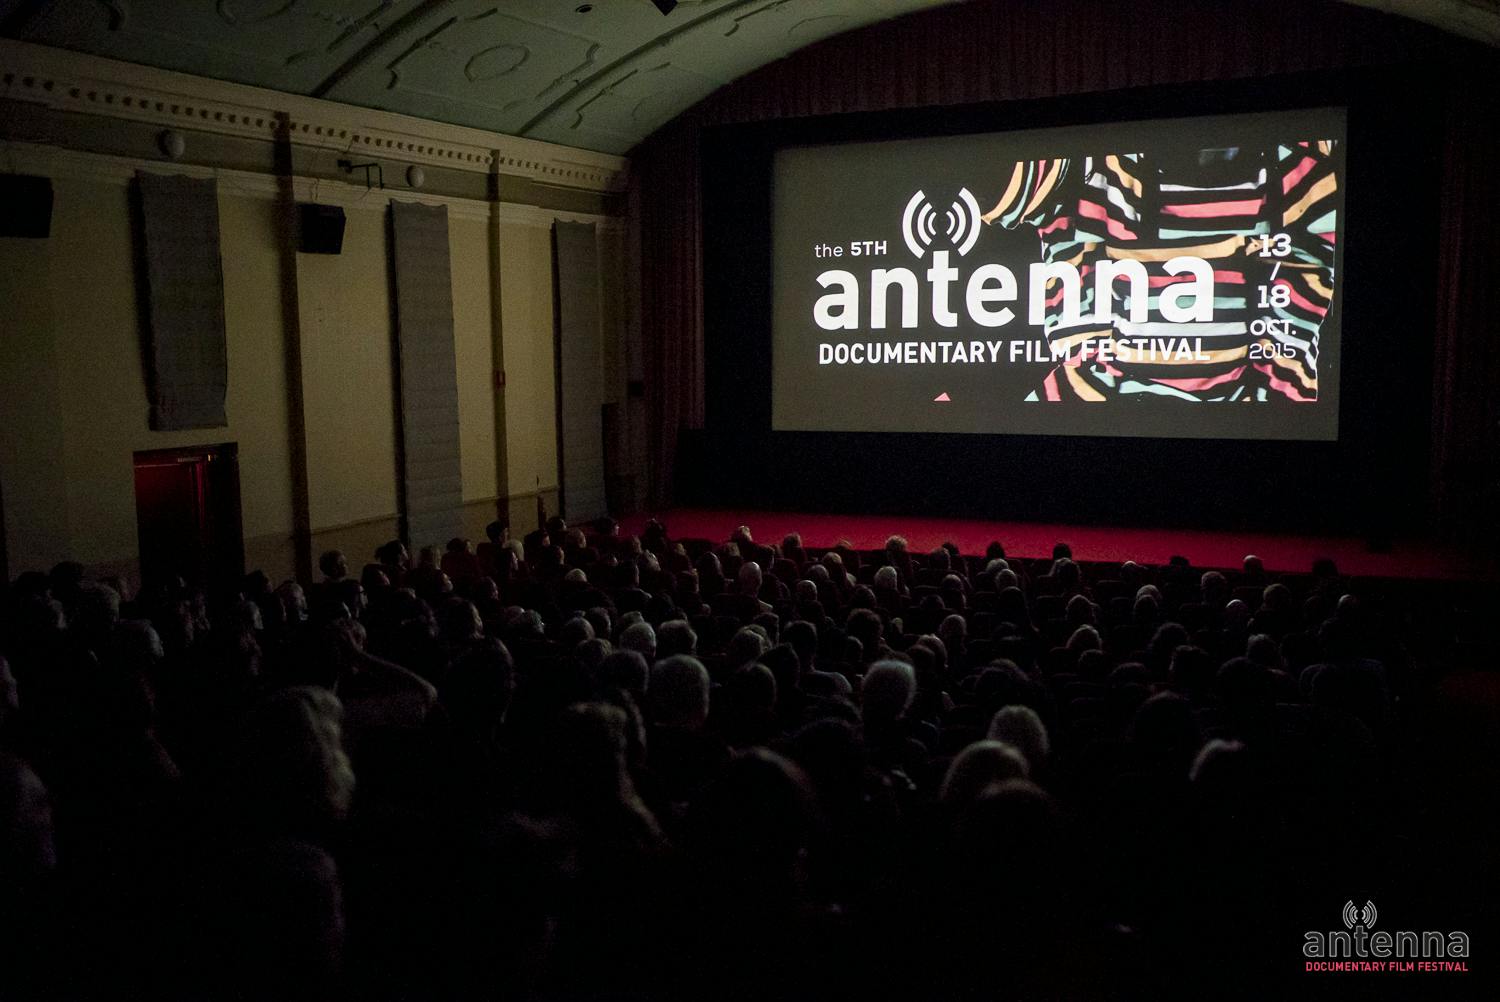 Antenna Documentary Film Festival 2015 (2015-10-13 Opening Night